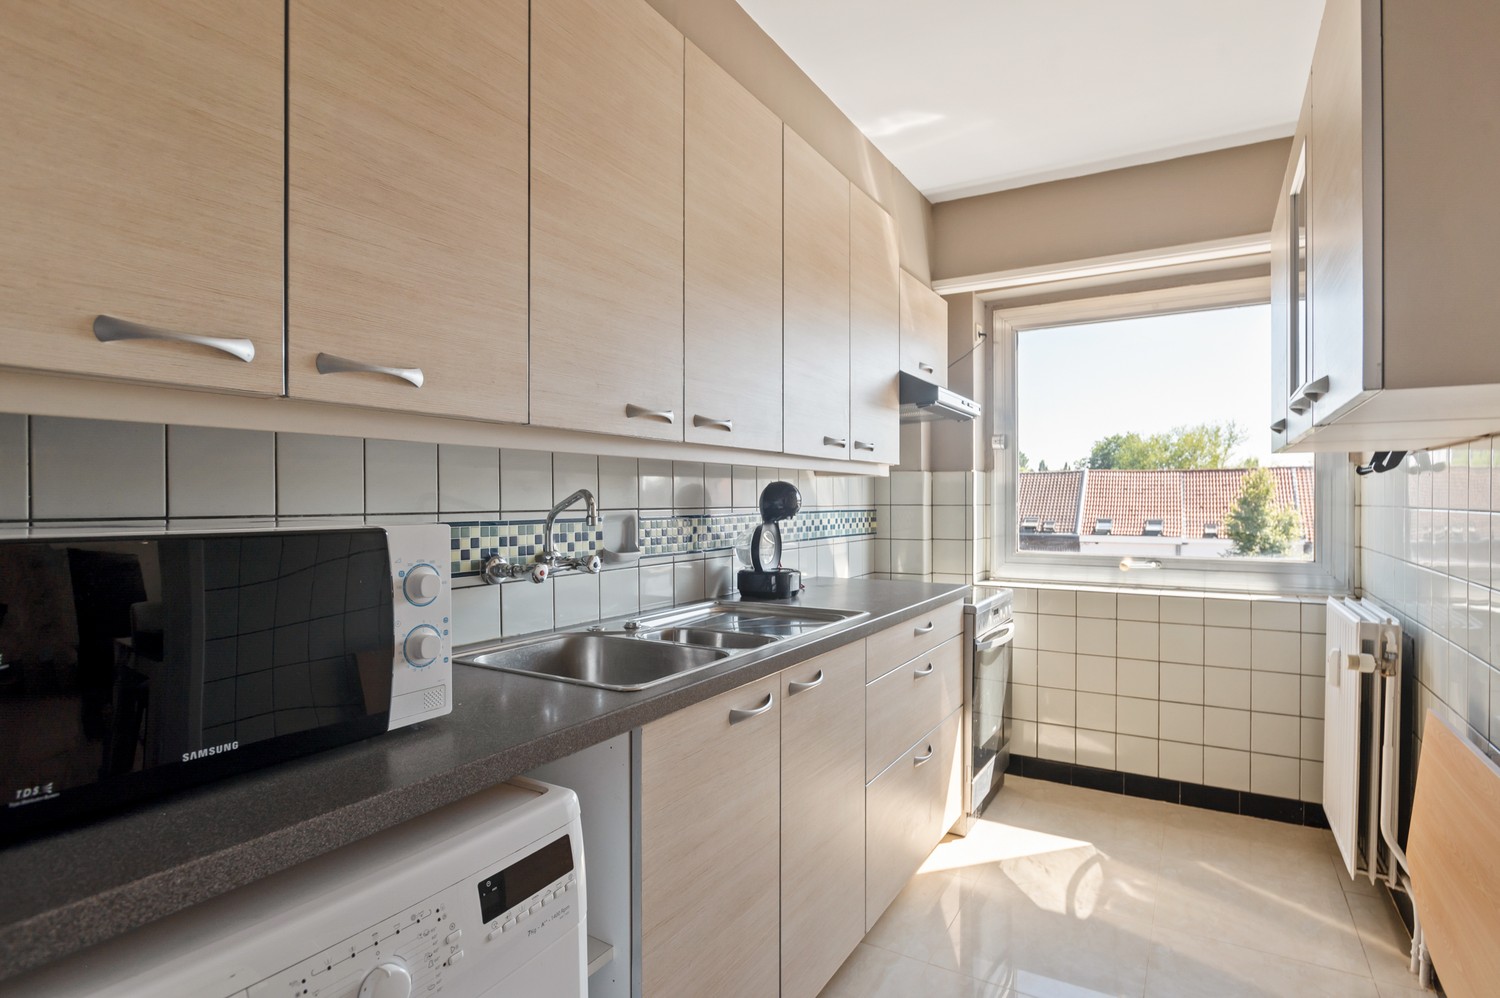 Instapklaar appartement met twee slaapkamers en ruim terras in Deurne! afbeelding 8